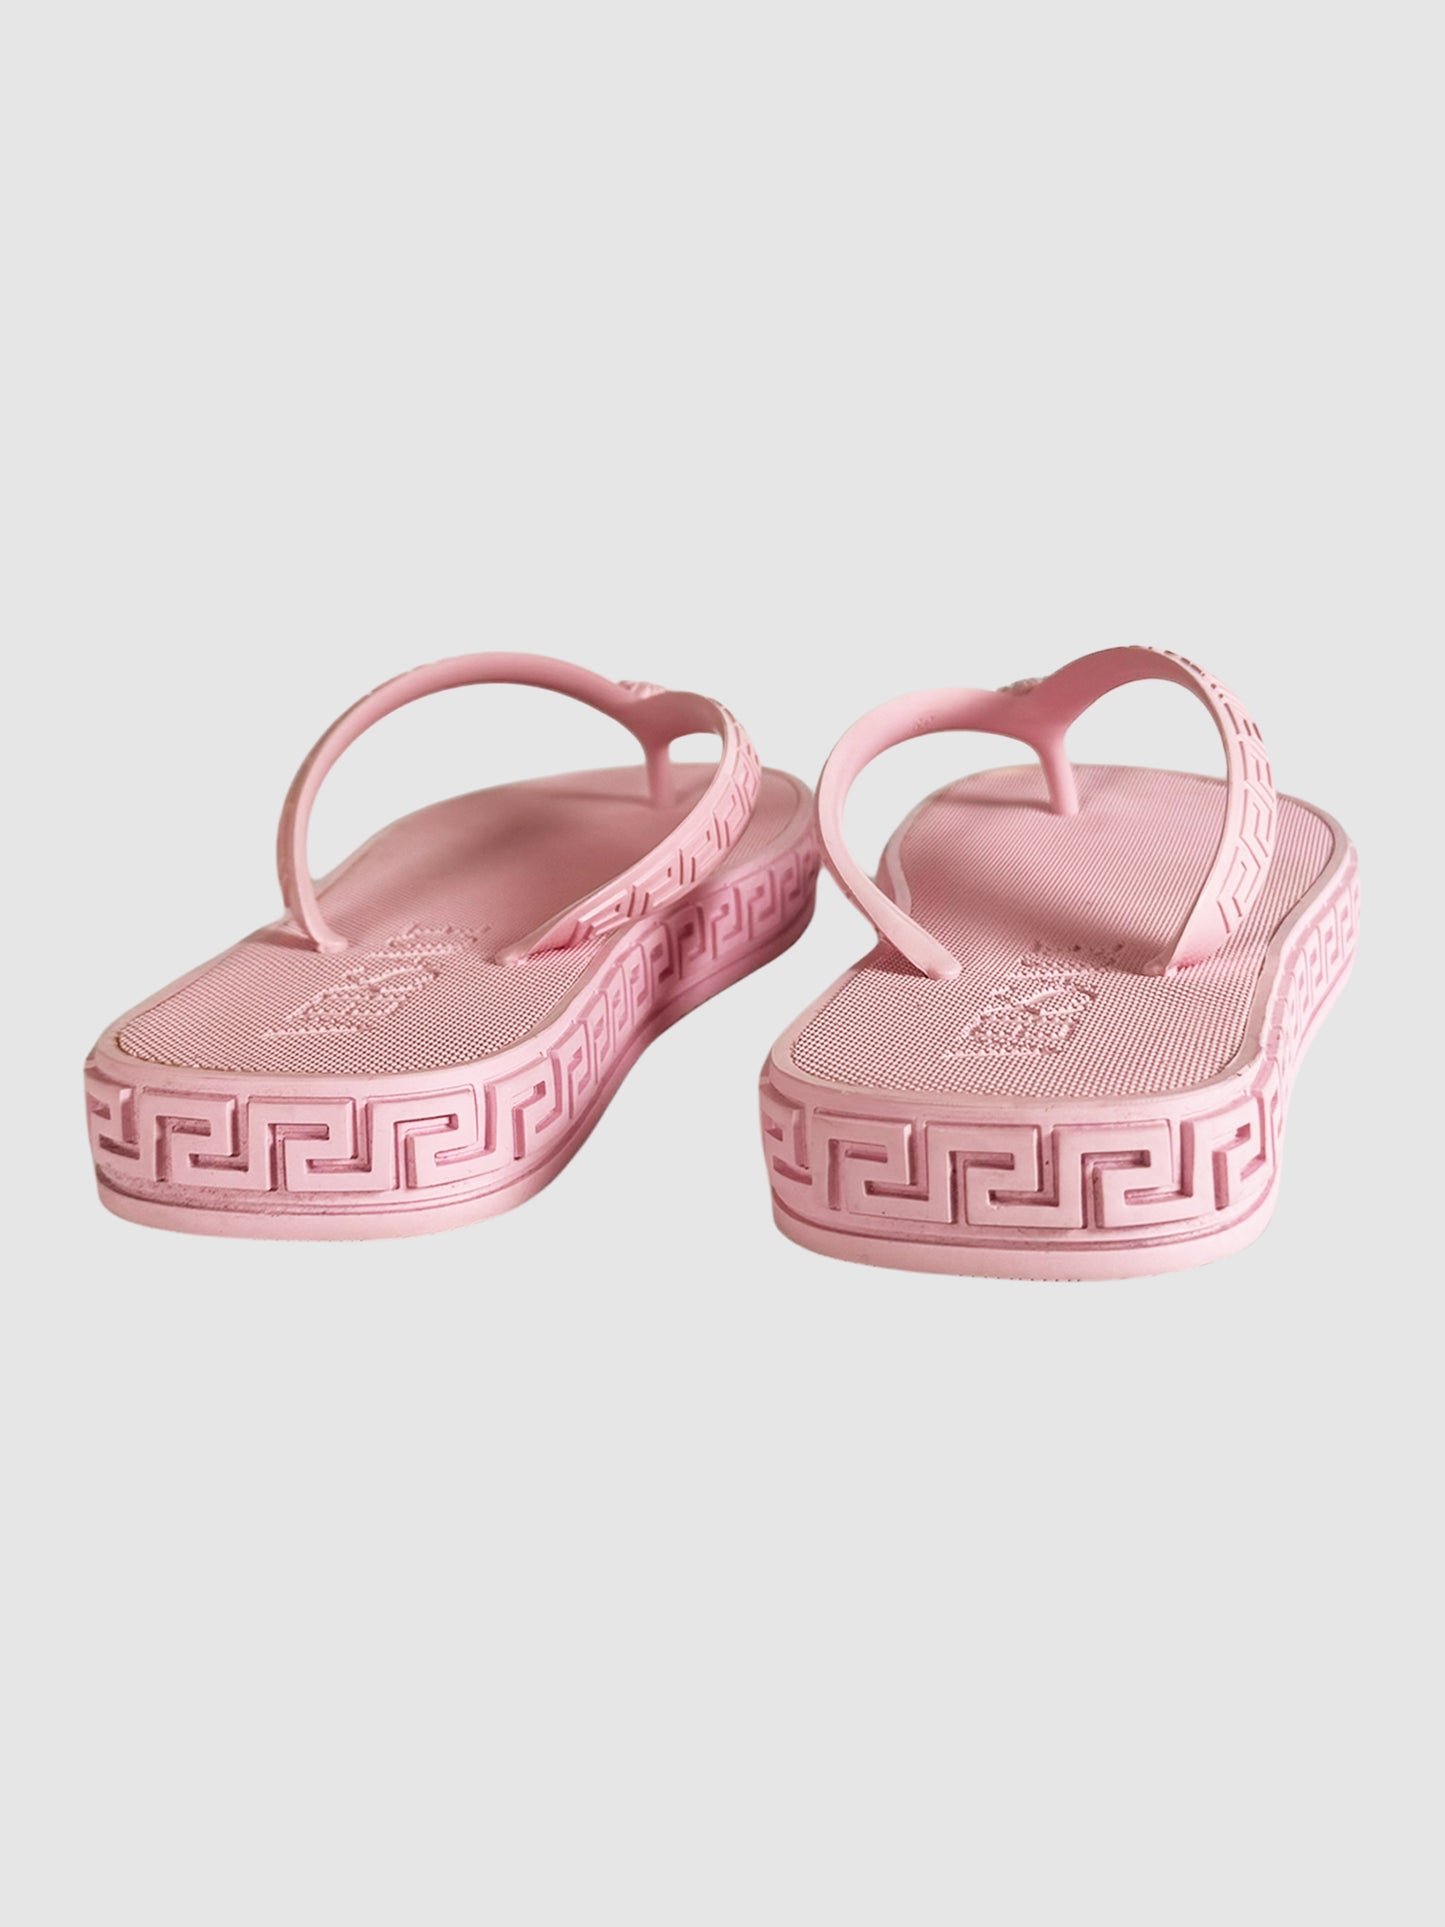 Greca Rubber Sandals - Size 39